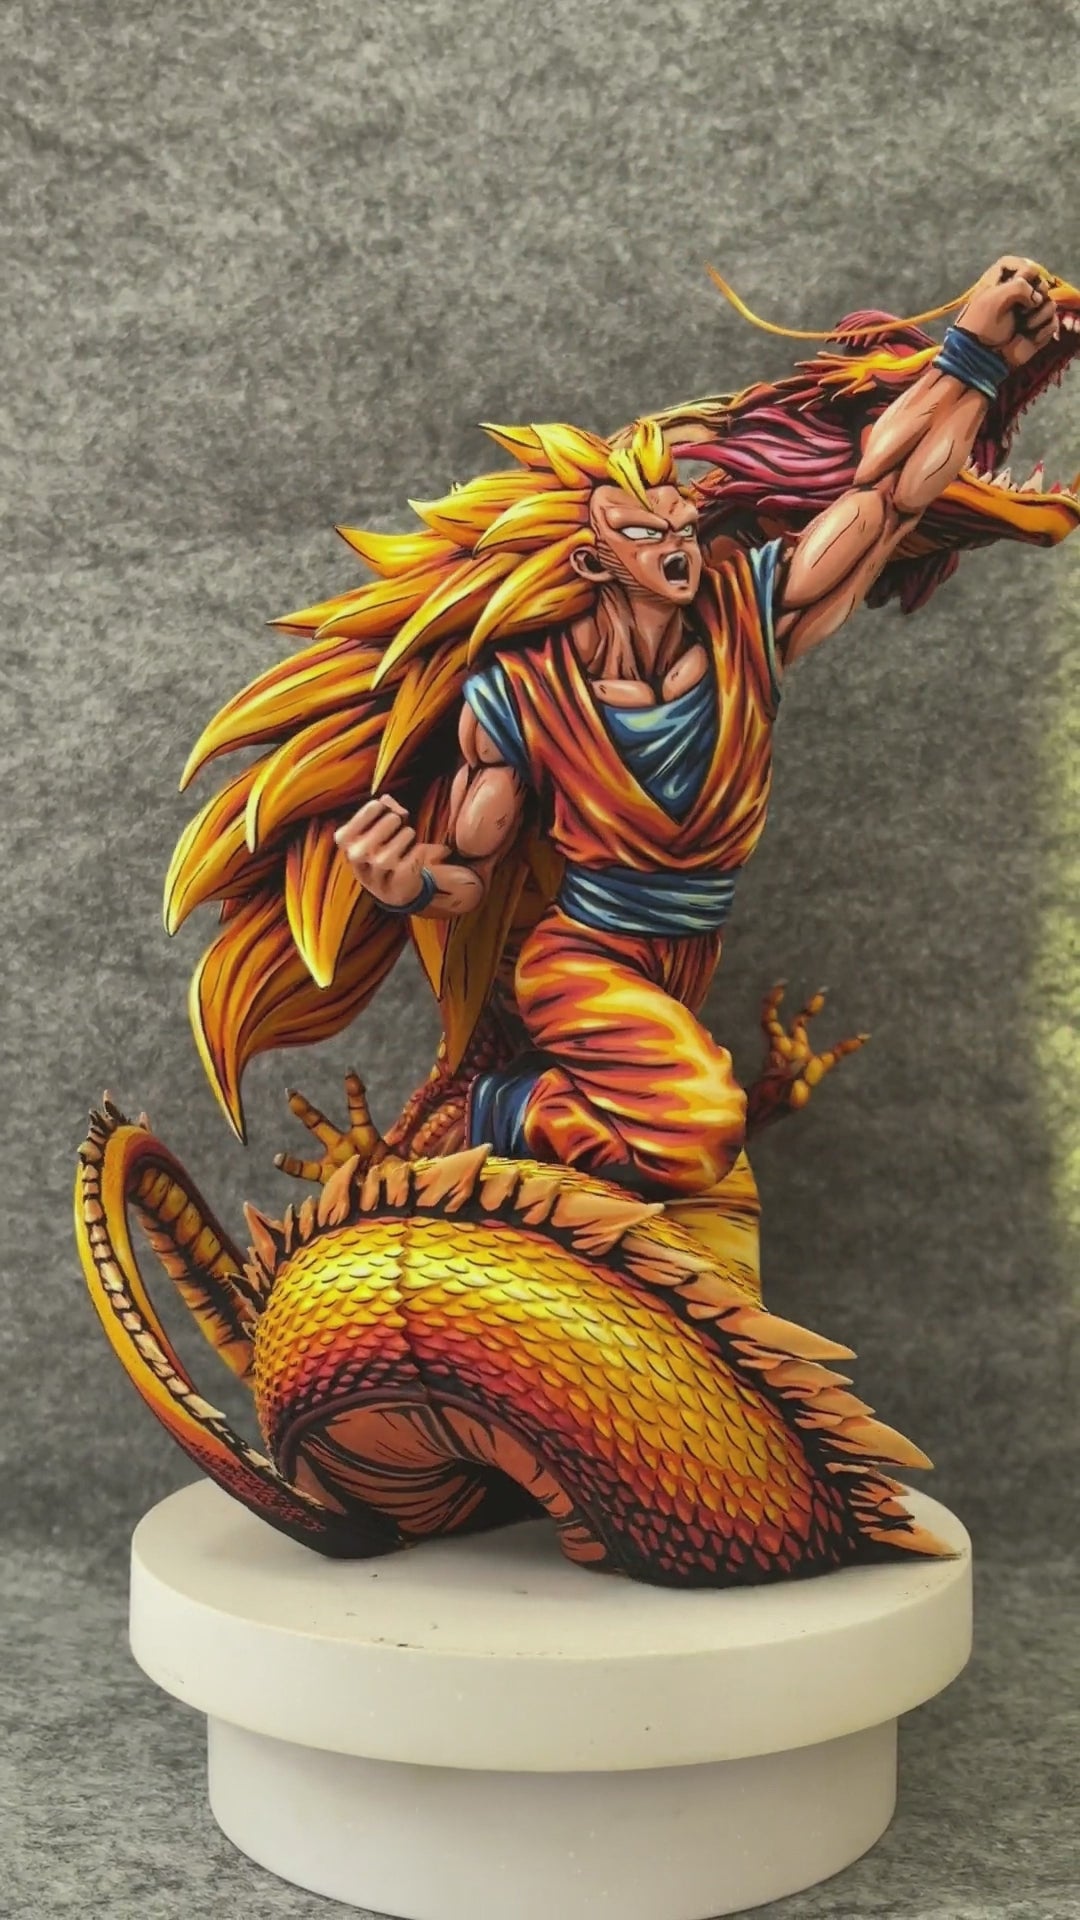 Cargar video: dragonball figure-lyk repaint